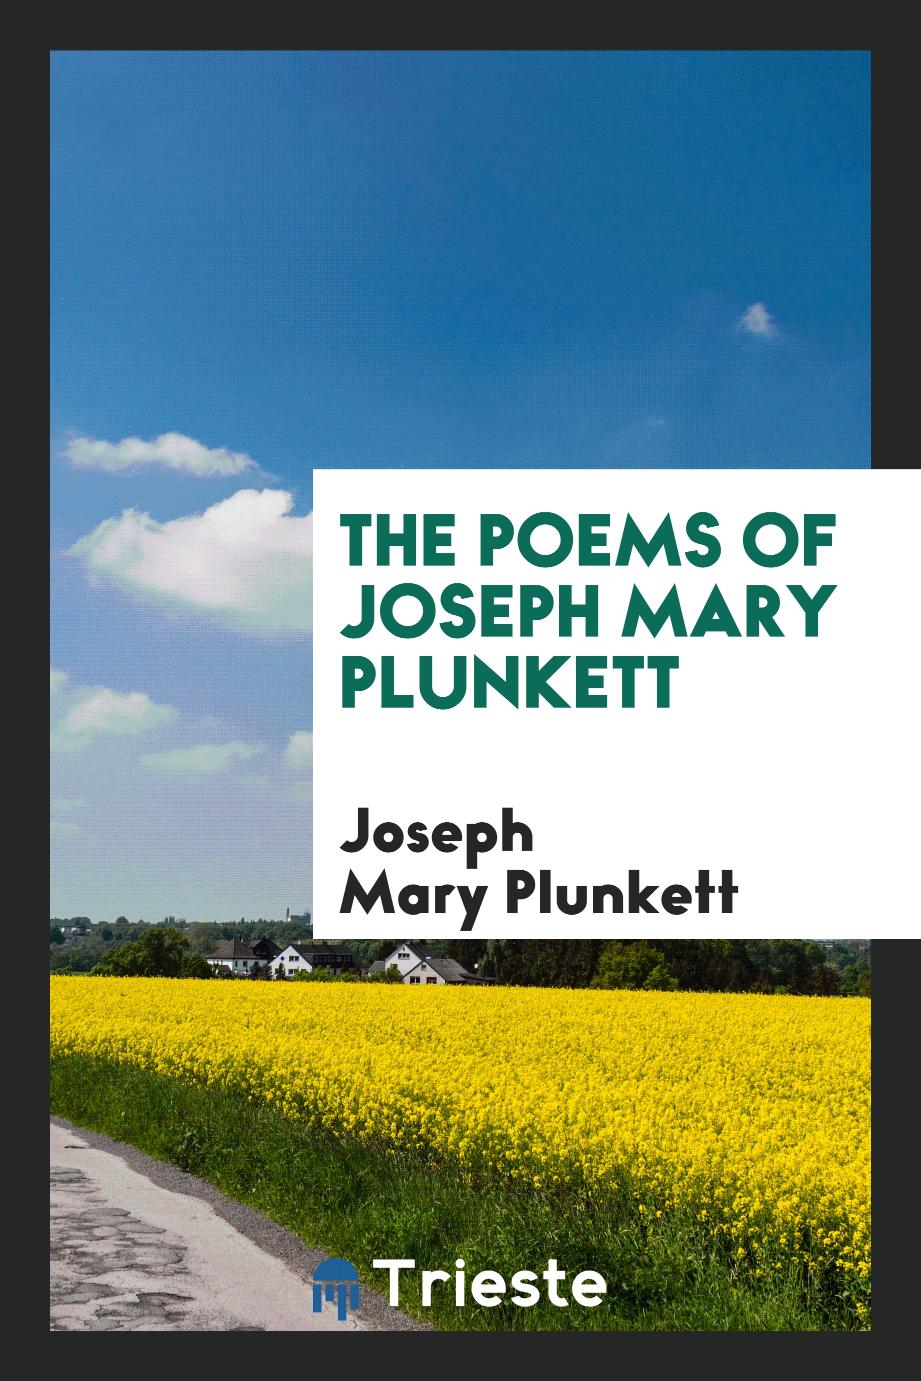 The poems of Joseph Mary Plunkett